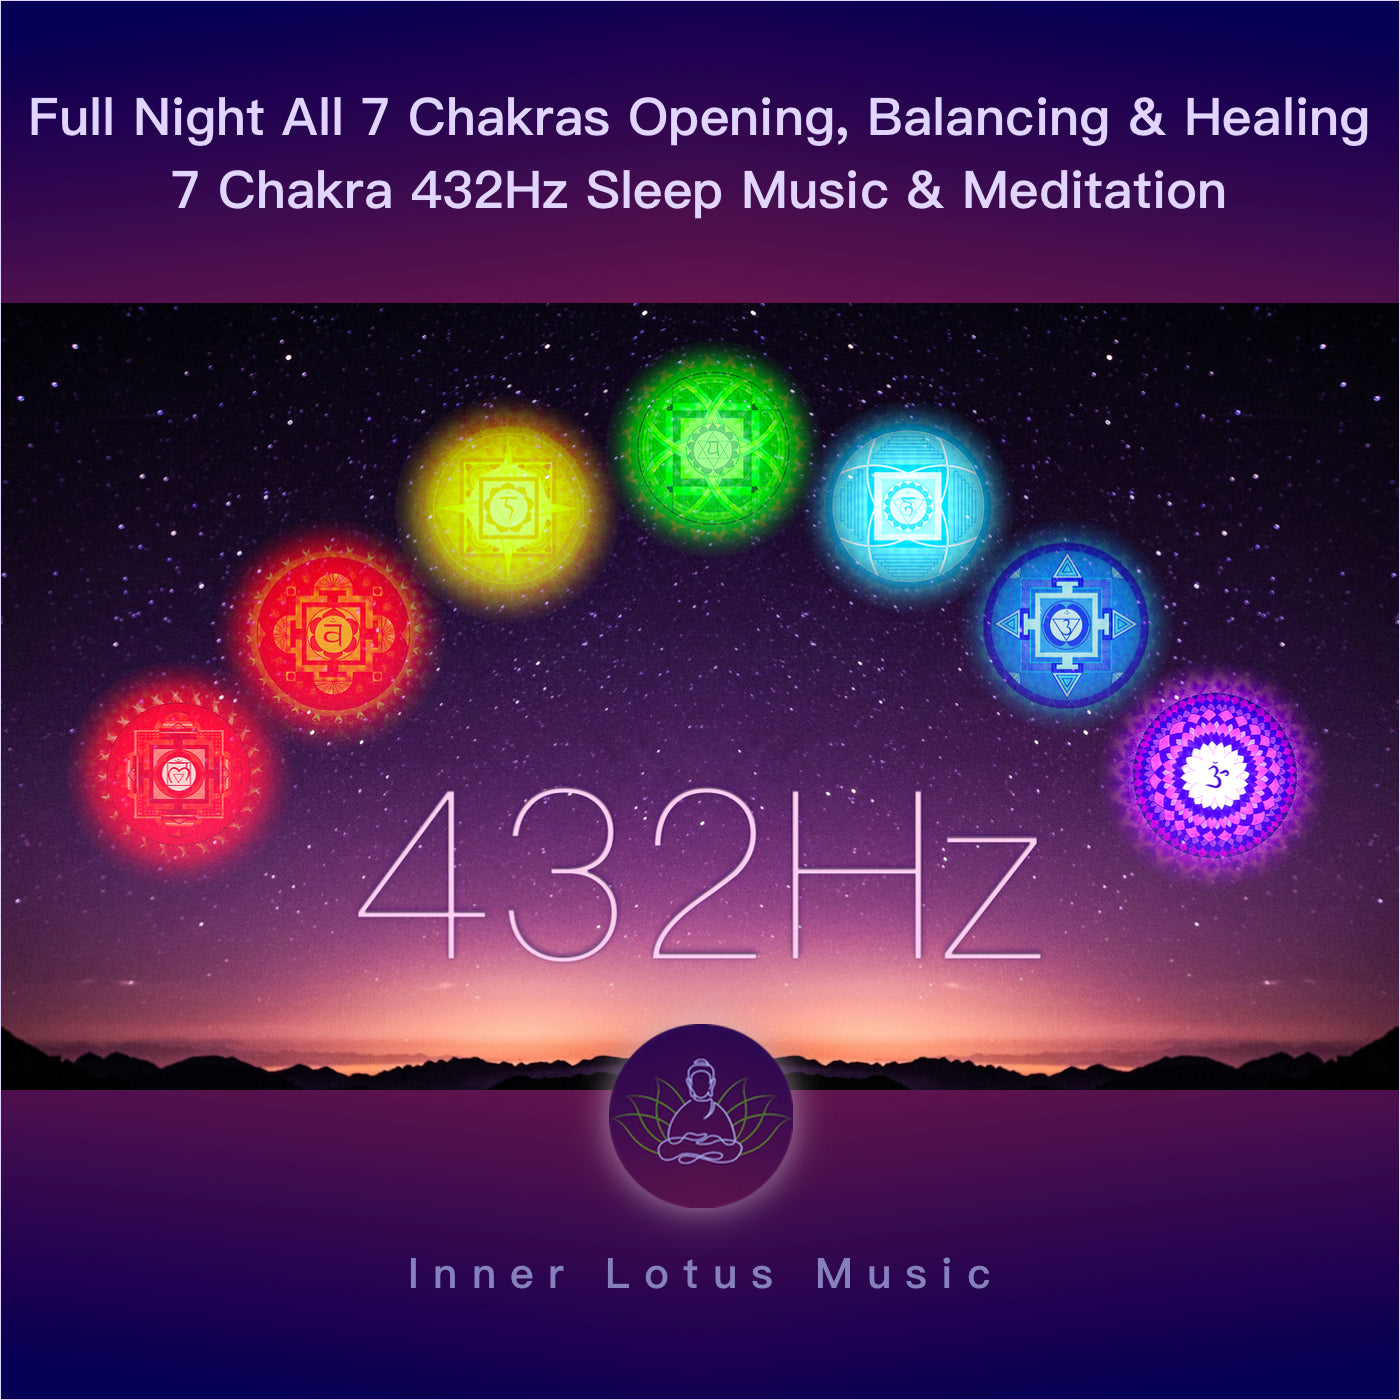 Full Night All 7 Chakras Opening, Balancing & Healing | 7 Chakra 432Hz Sleep Music & Meditation